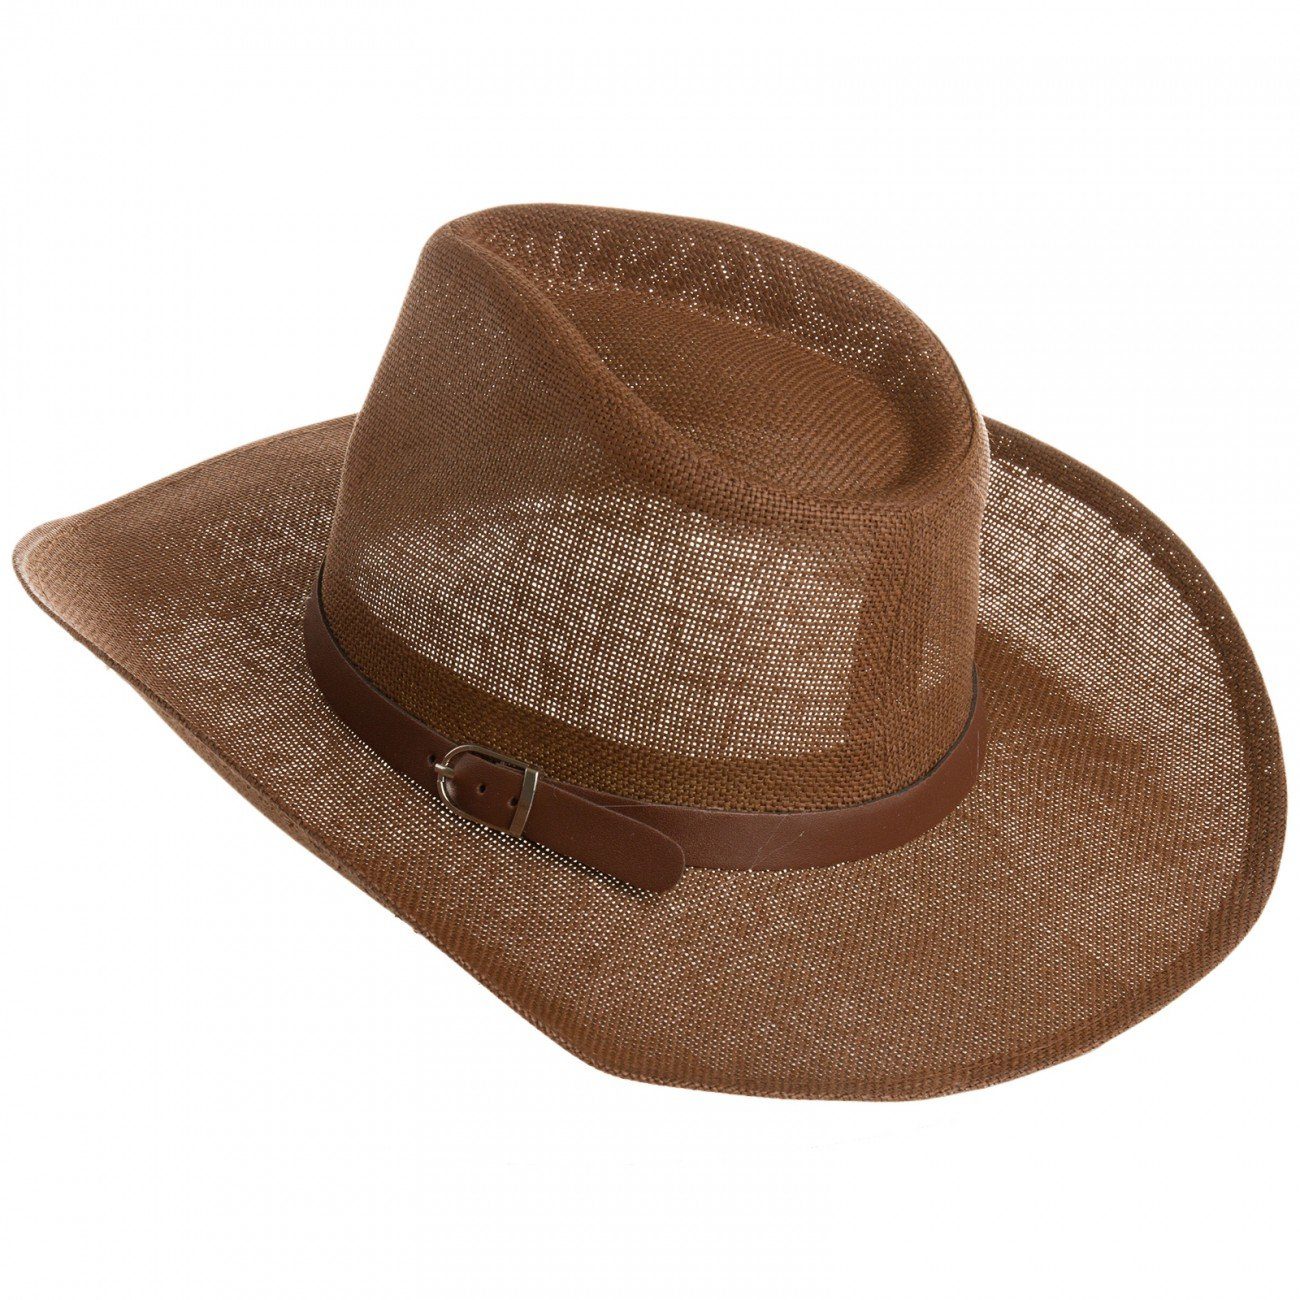 Cowboy dunkelbraun HT009 Hut Herren mit Gürtelband braunem Cowboyhut Caspar